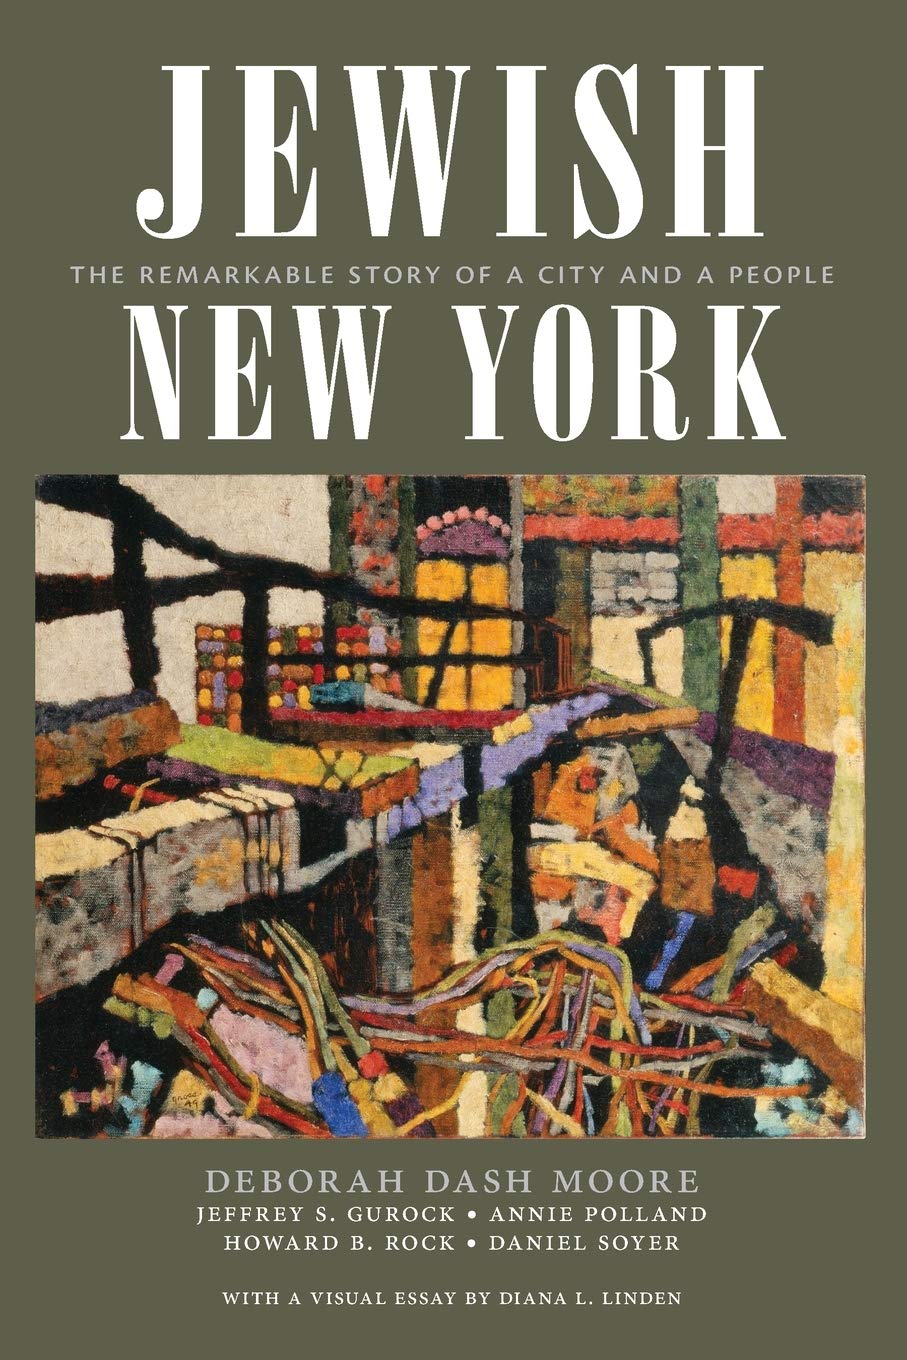 Jewish New York | Deborah Dash Moore, Jeffrey S. Gurock, Annie Polland, Howard B. Rock, Daniel Soyer